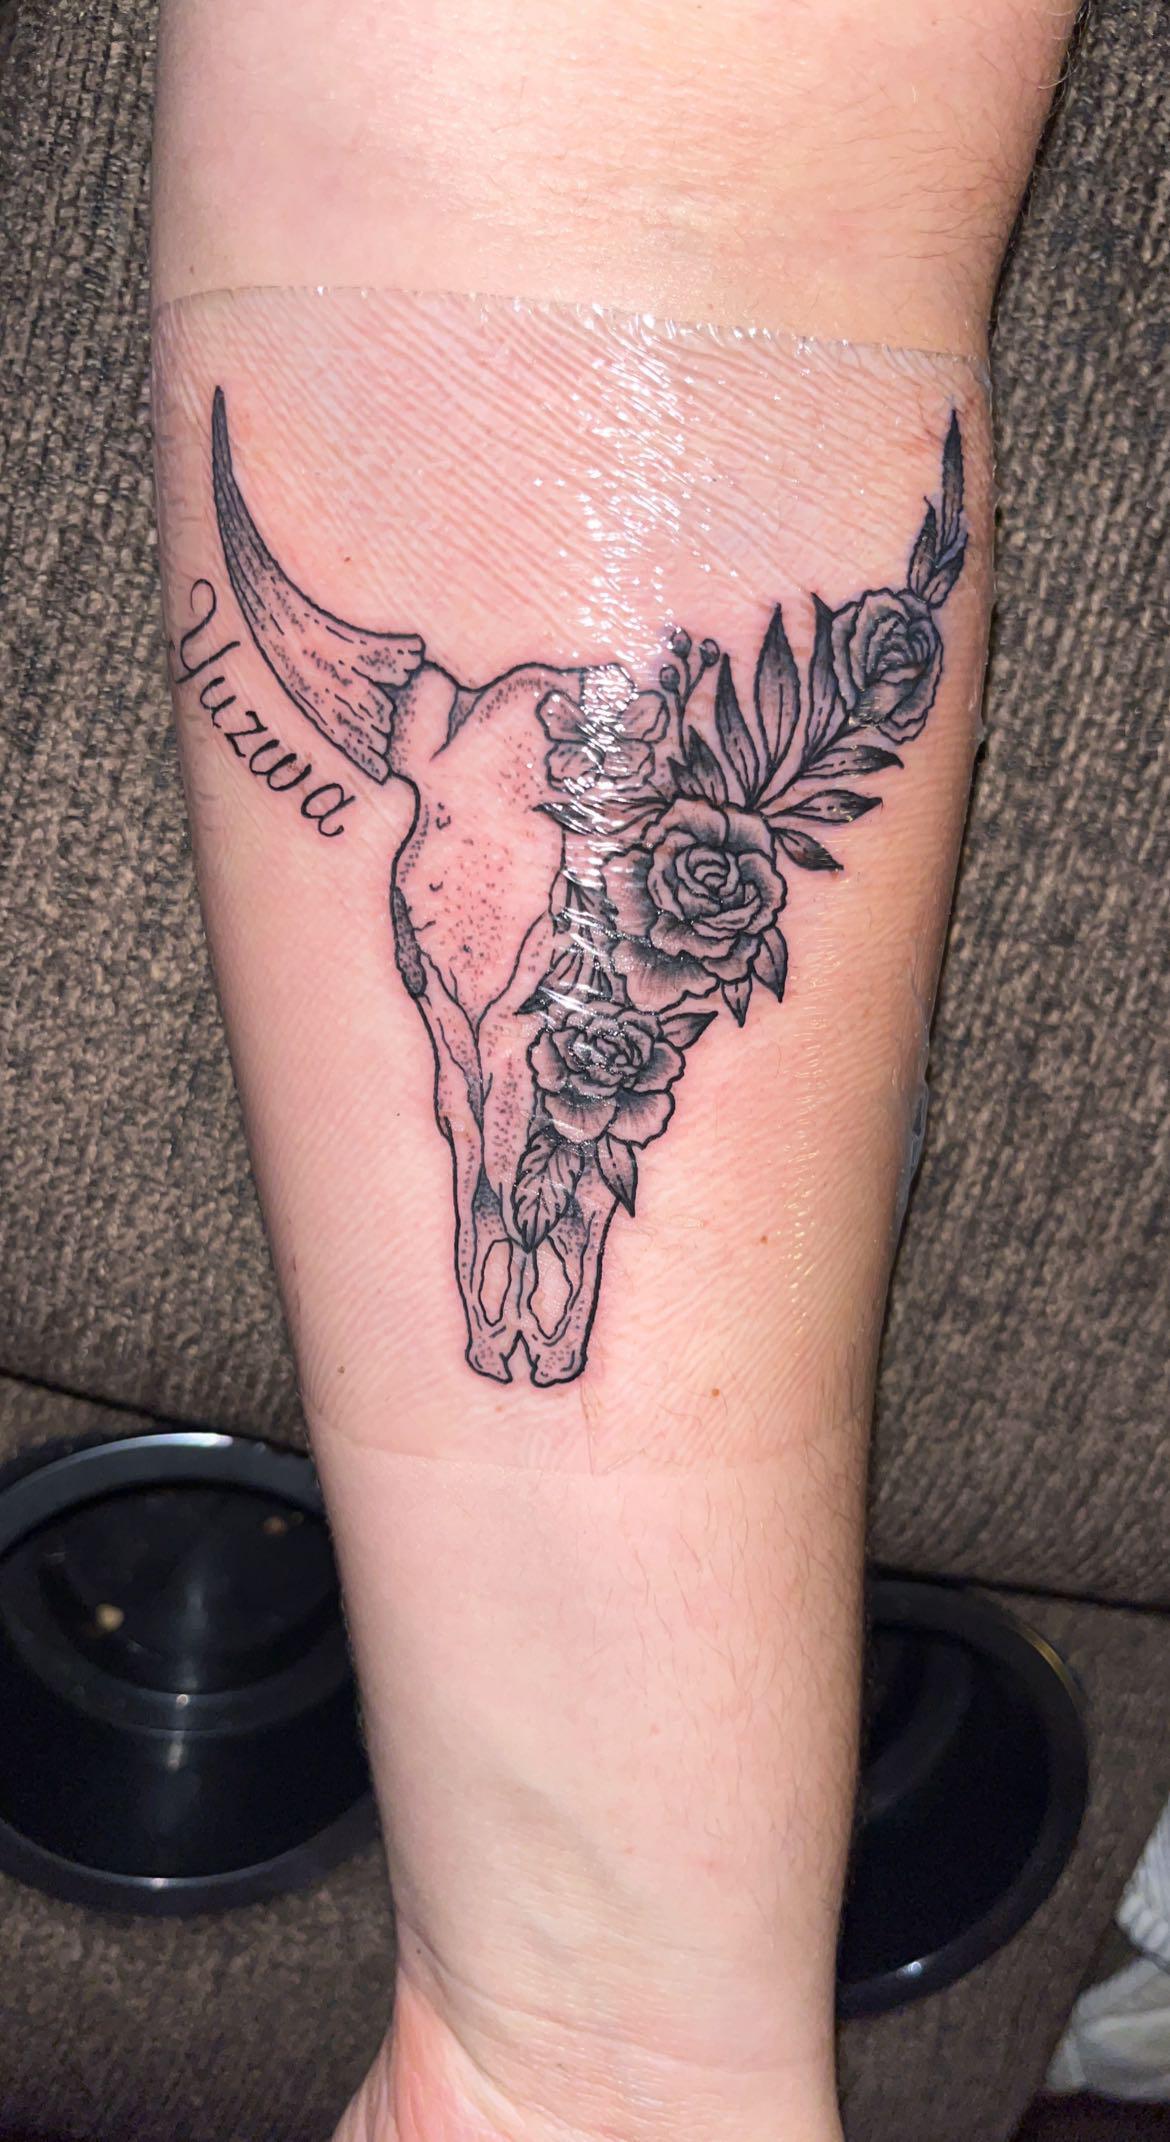 Rustic tattoo  In progress ขอบคณทใชบรการครบ Artist  Keng  Machine  inkjectacoiltattoomachinespektraEdgeX Instagram   chatchaikeng Facebook  httpsmfacebookcomchatchaibiwut1 Tel   66954044011 สนใจรายละเอยด 